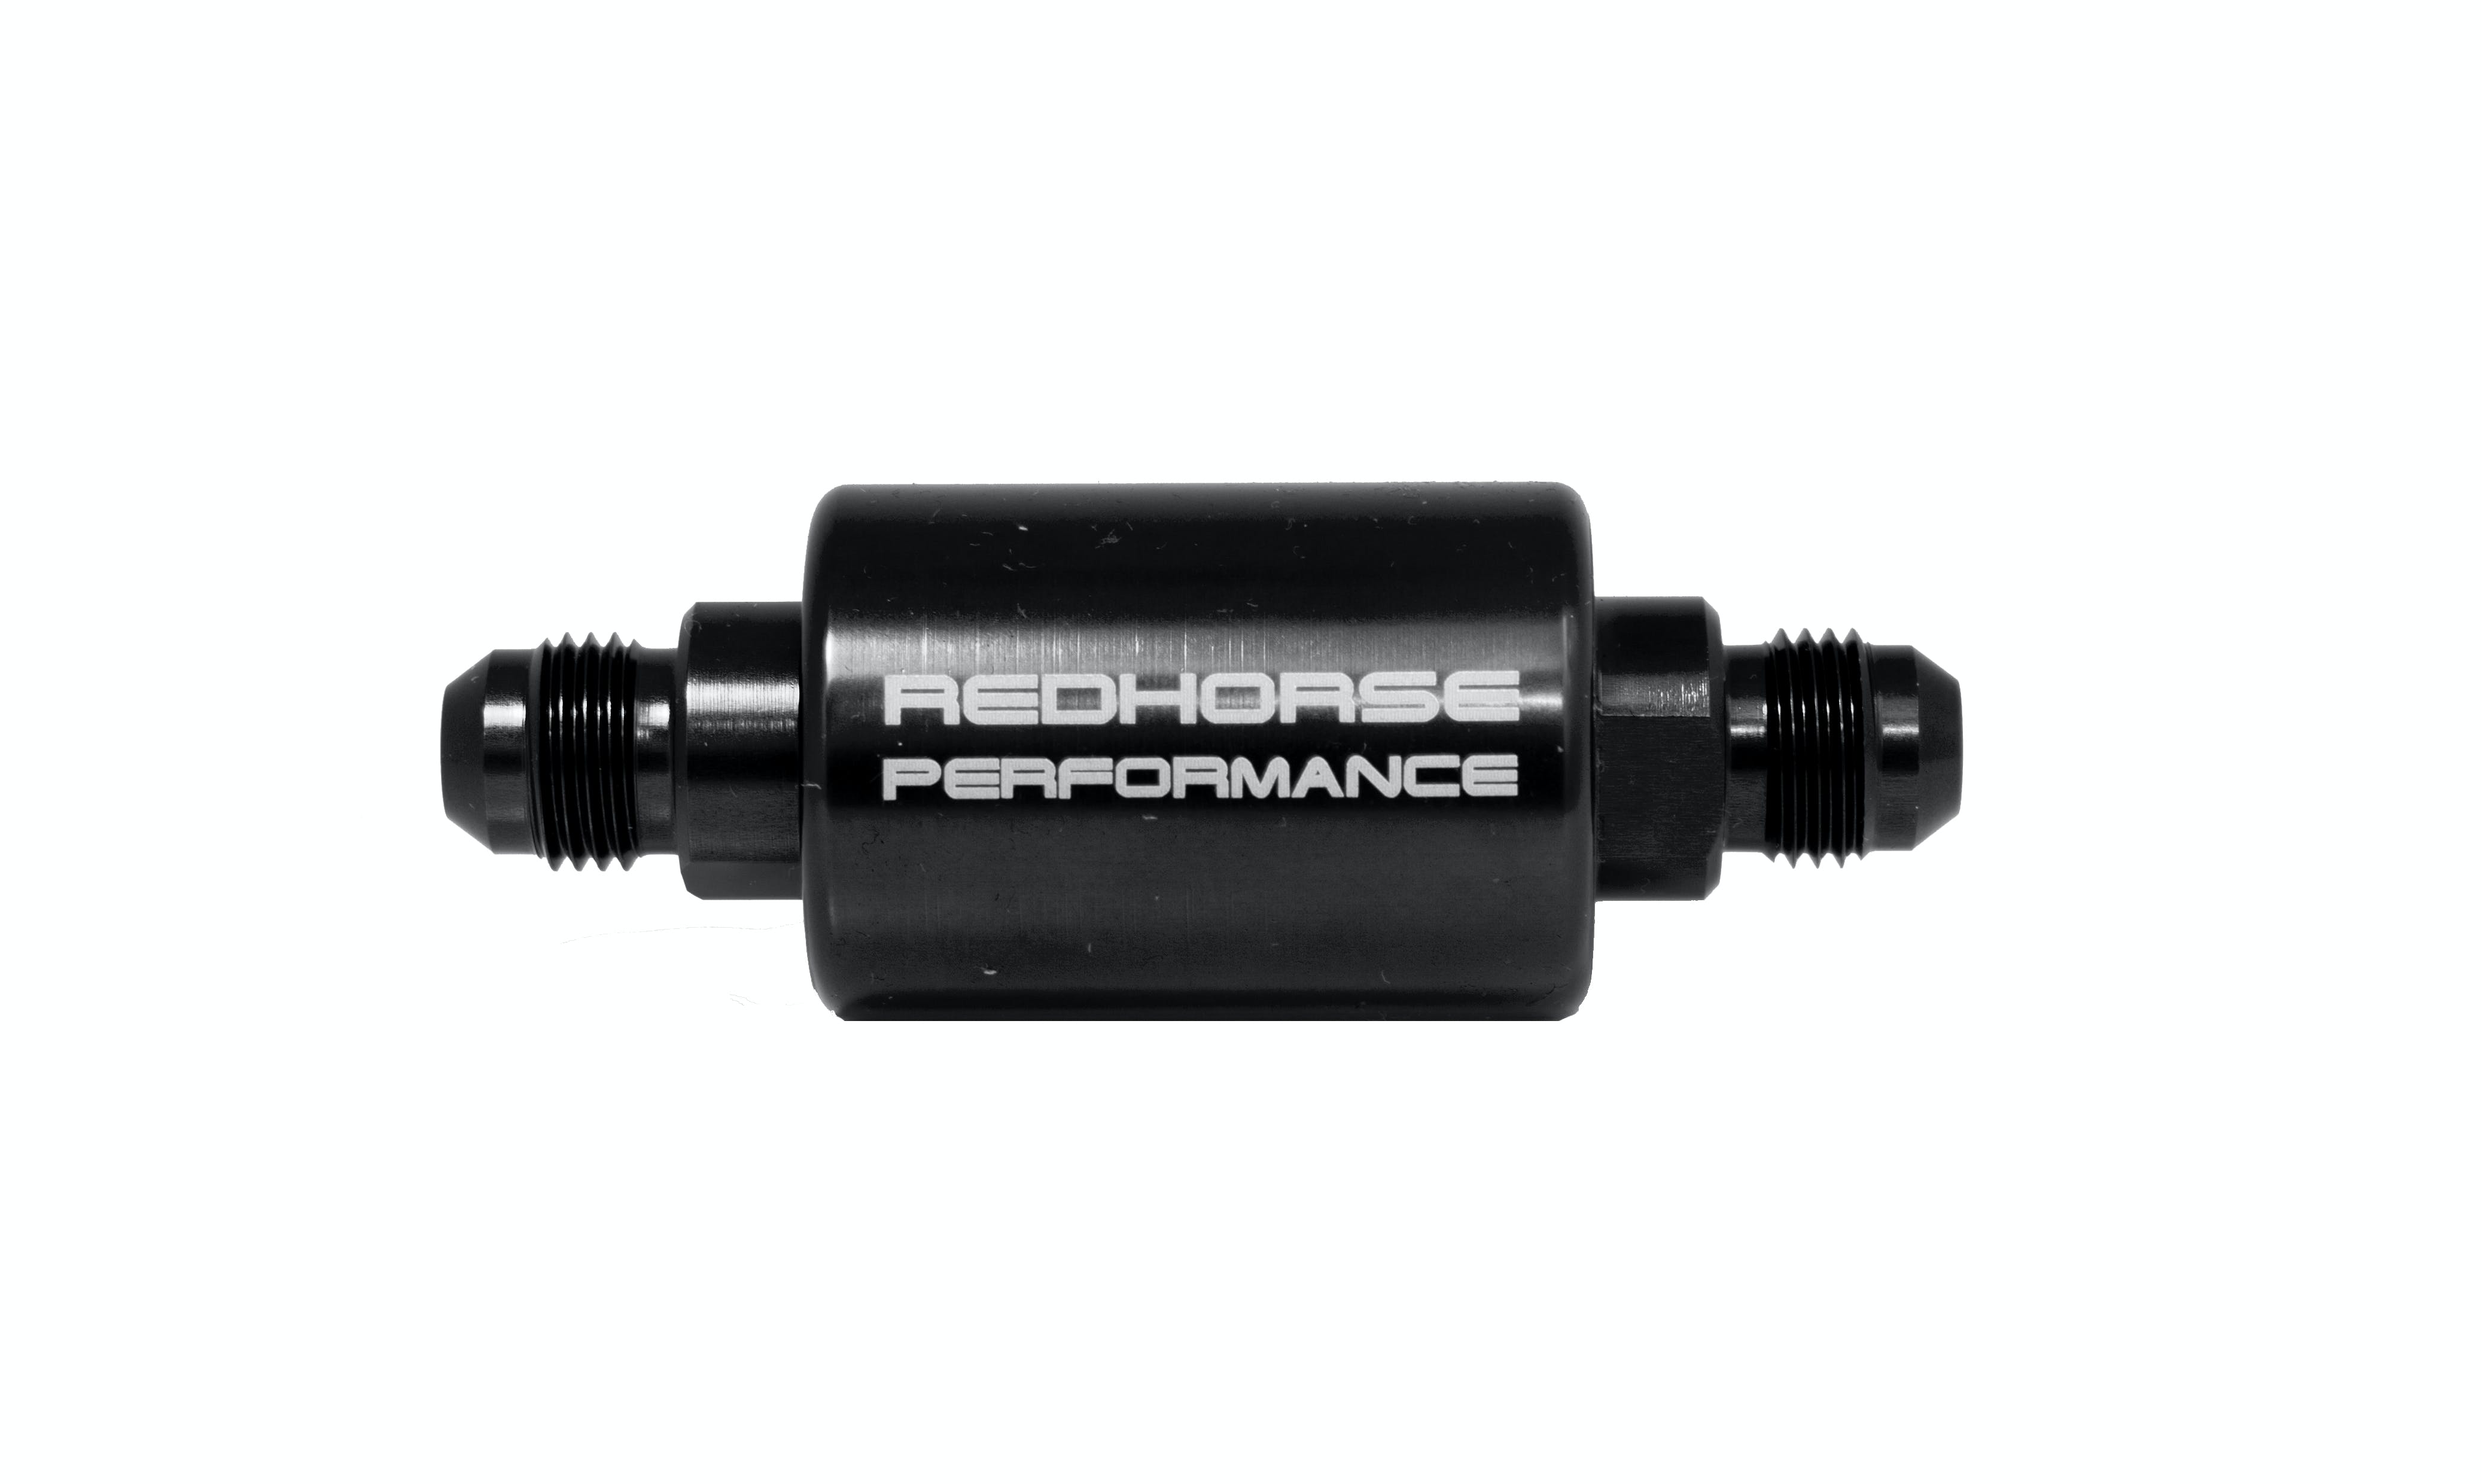 Redhorse Performance 4151-06-2 -06 inlet -06 outlet AN high flow fuel filter - black